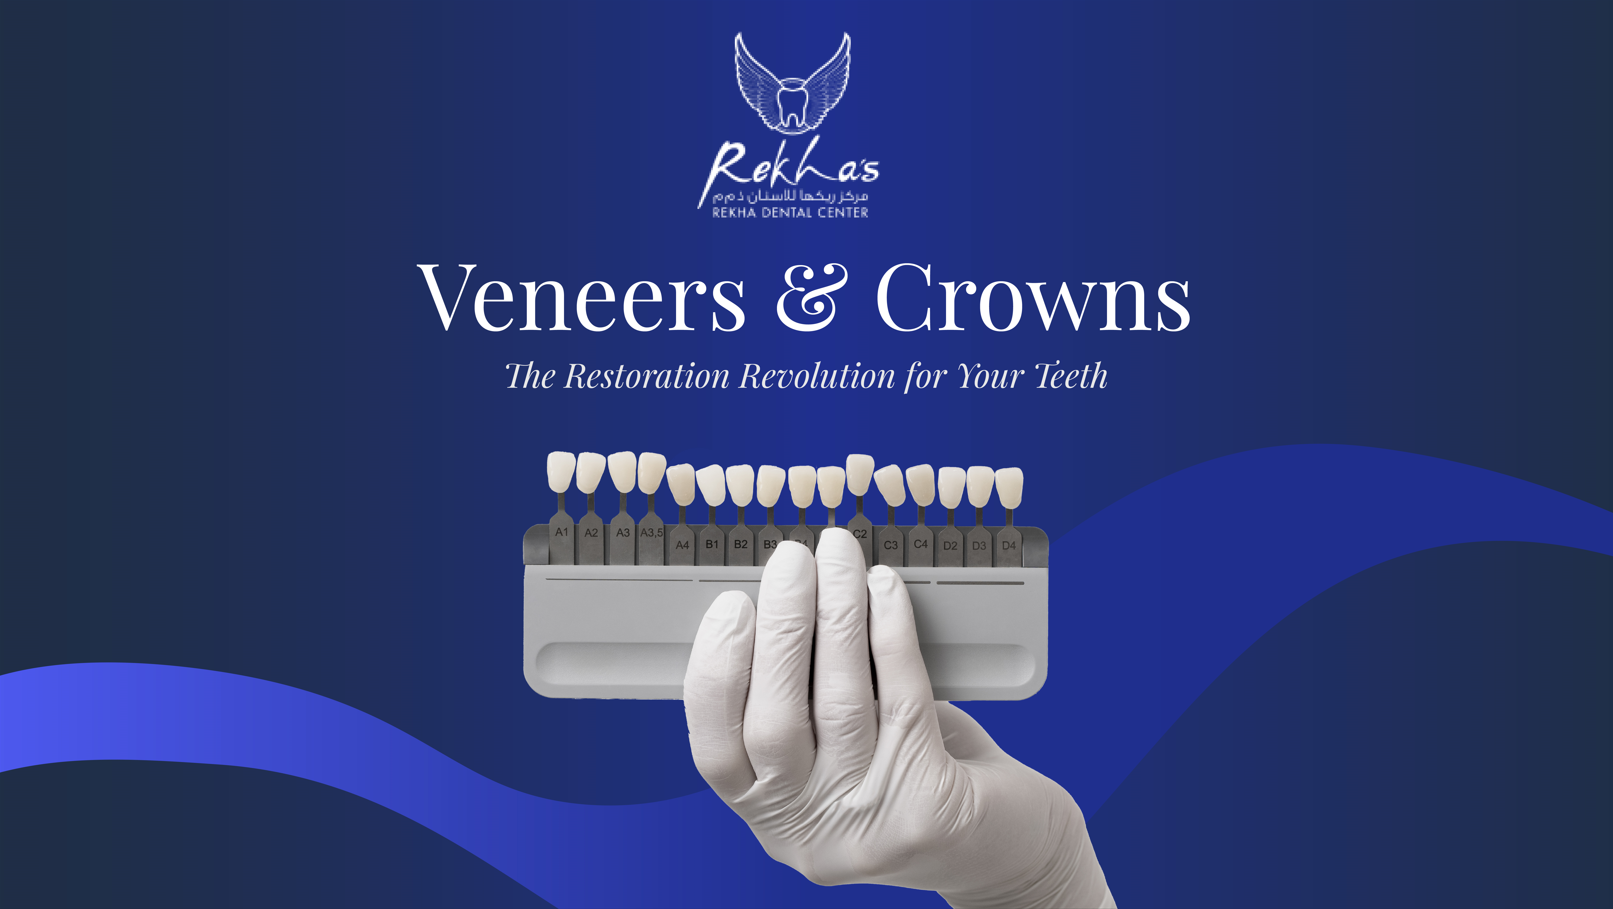 Veneers & Crowns: The Restoration Revolution for Your Teeth